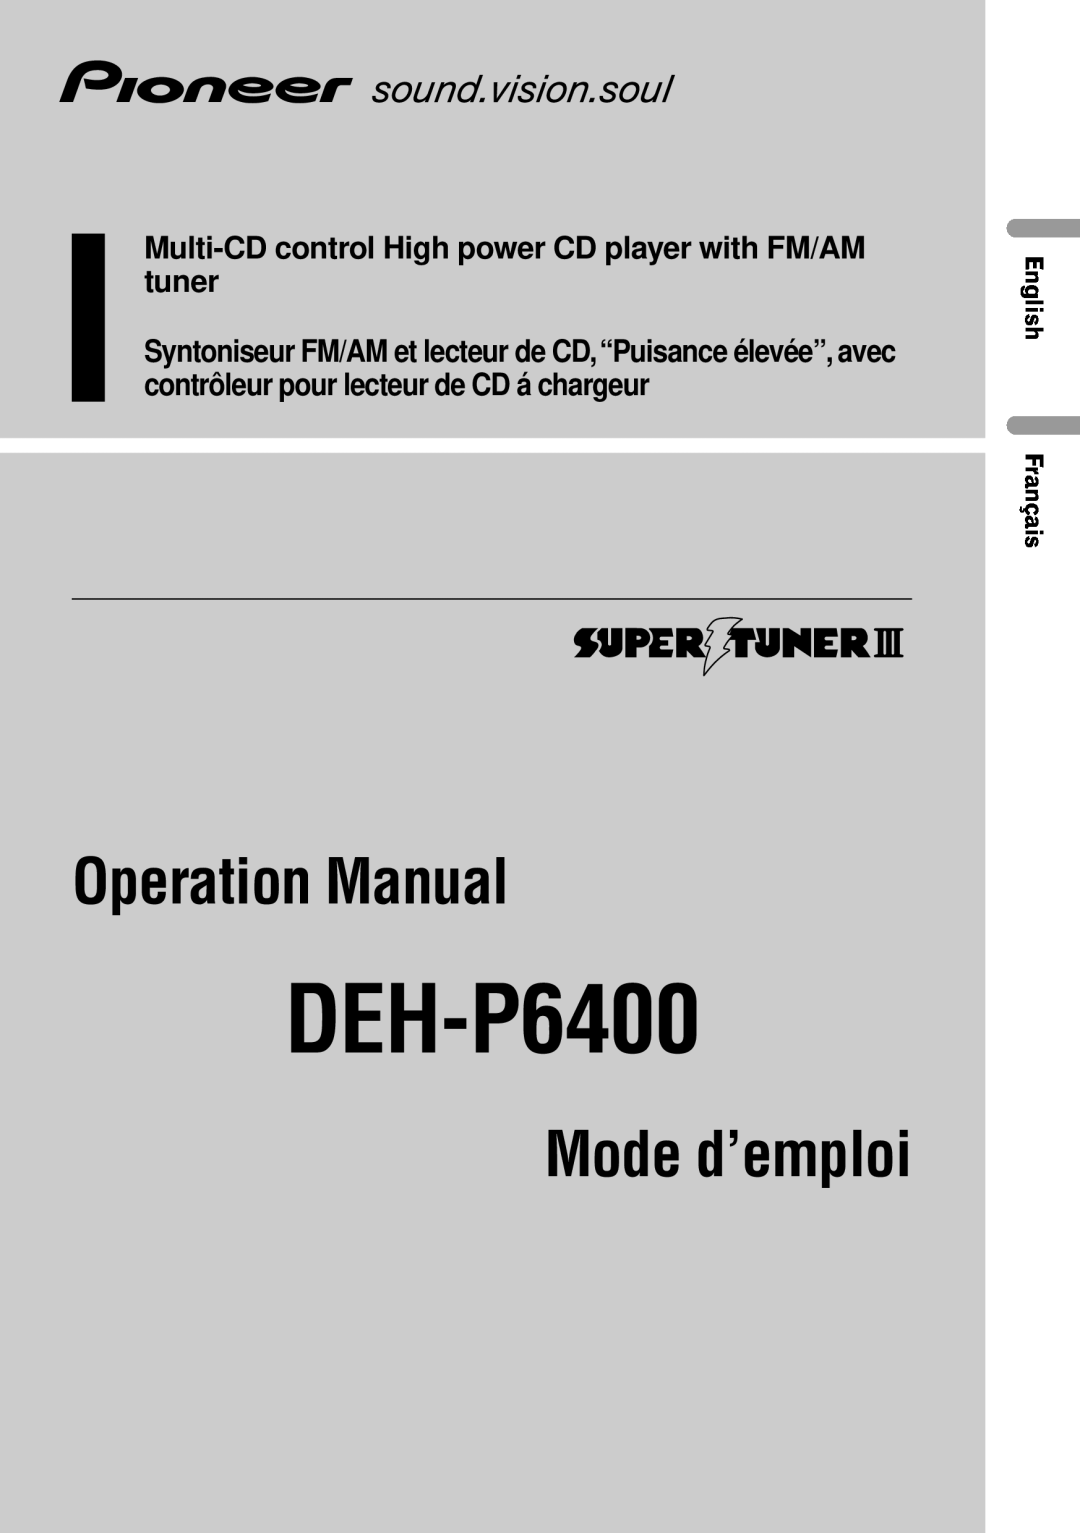 Pioneer DEH-P6400 operation manual English Français, Operation Manual, Mode d’emploi 